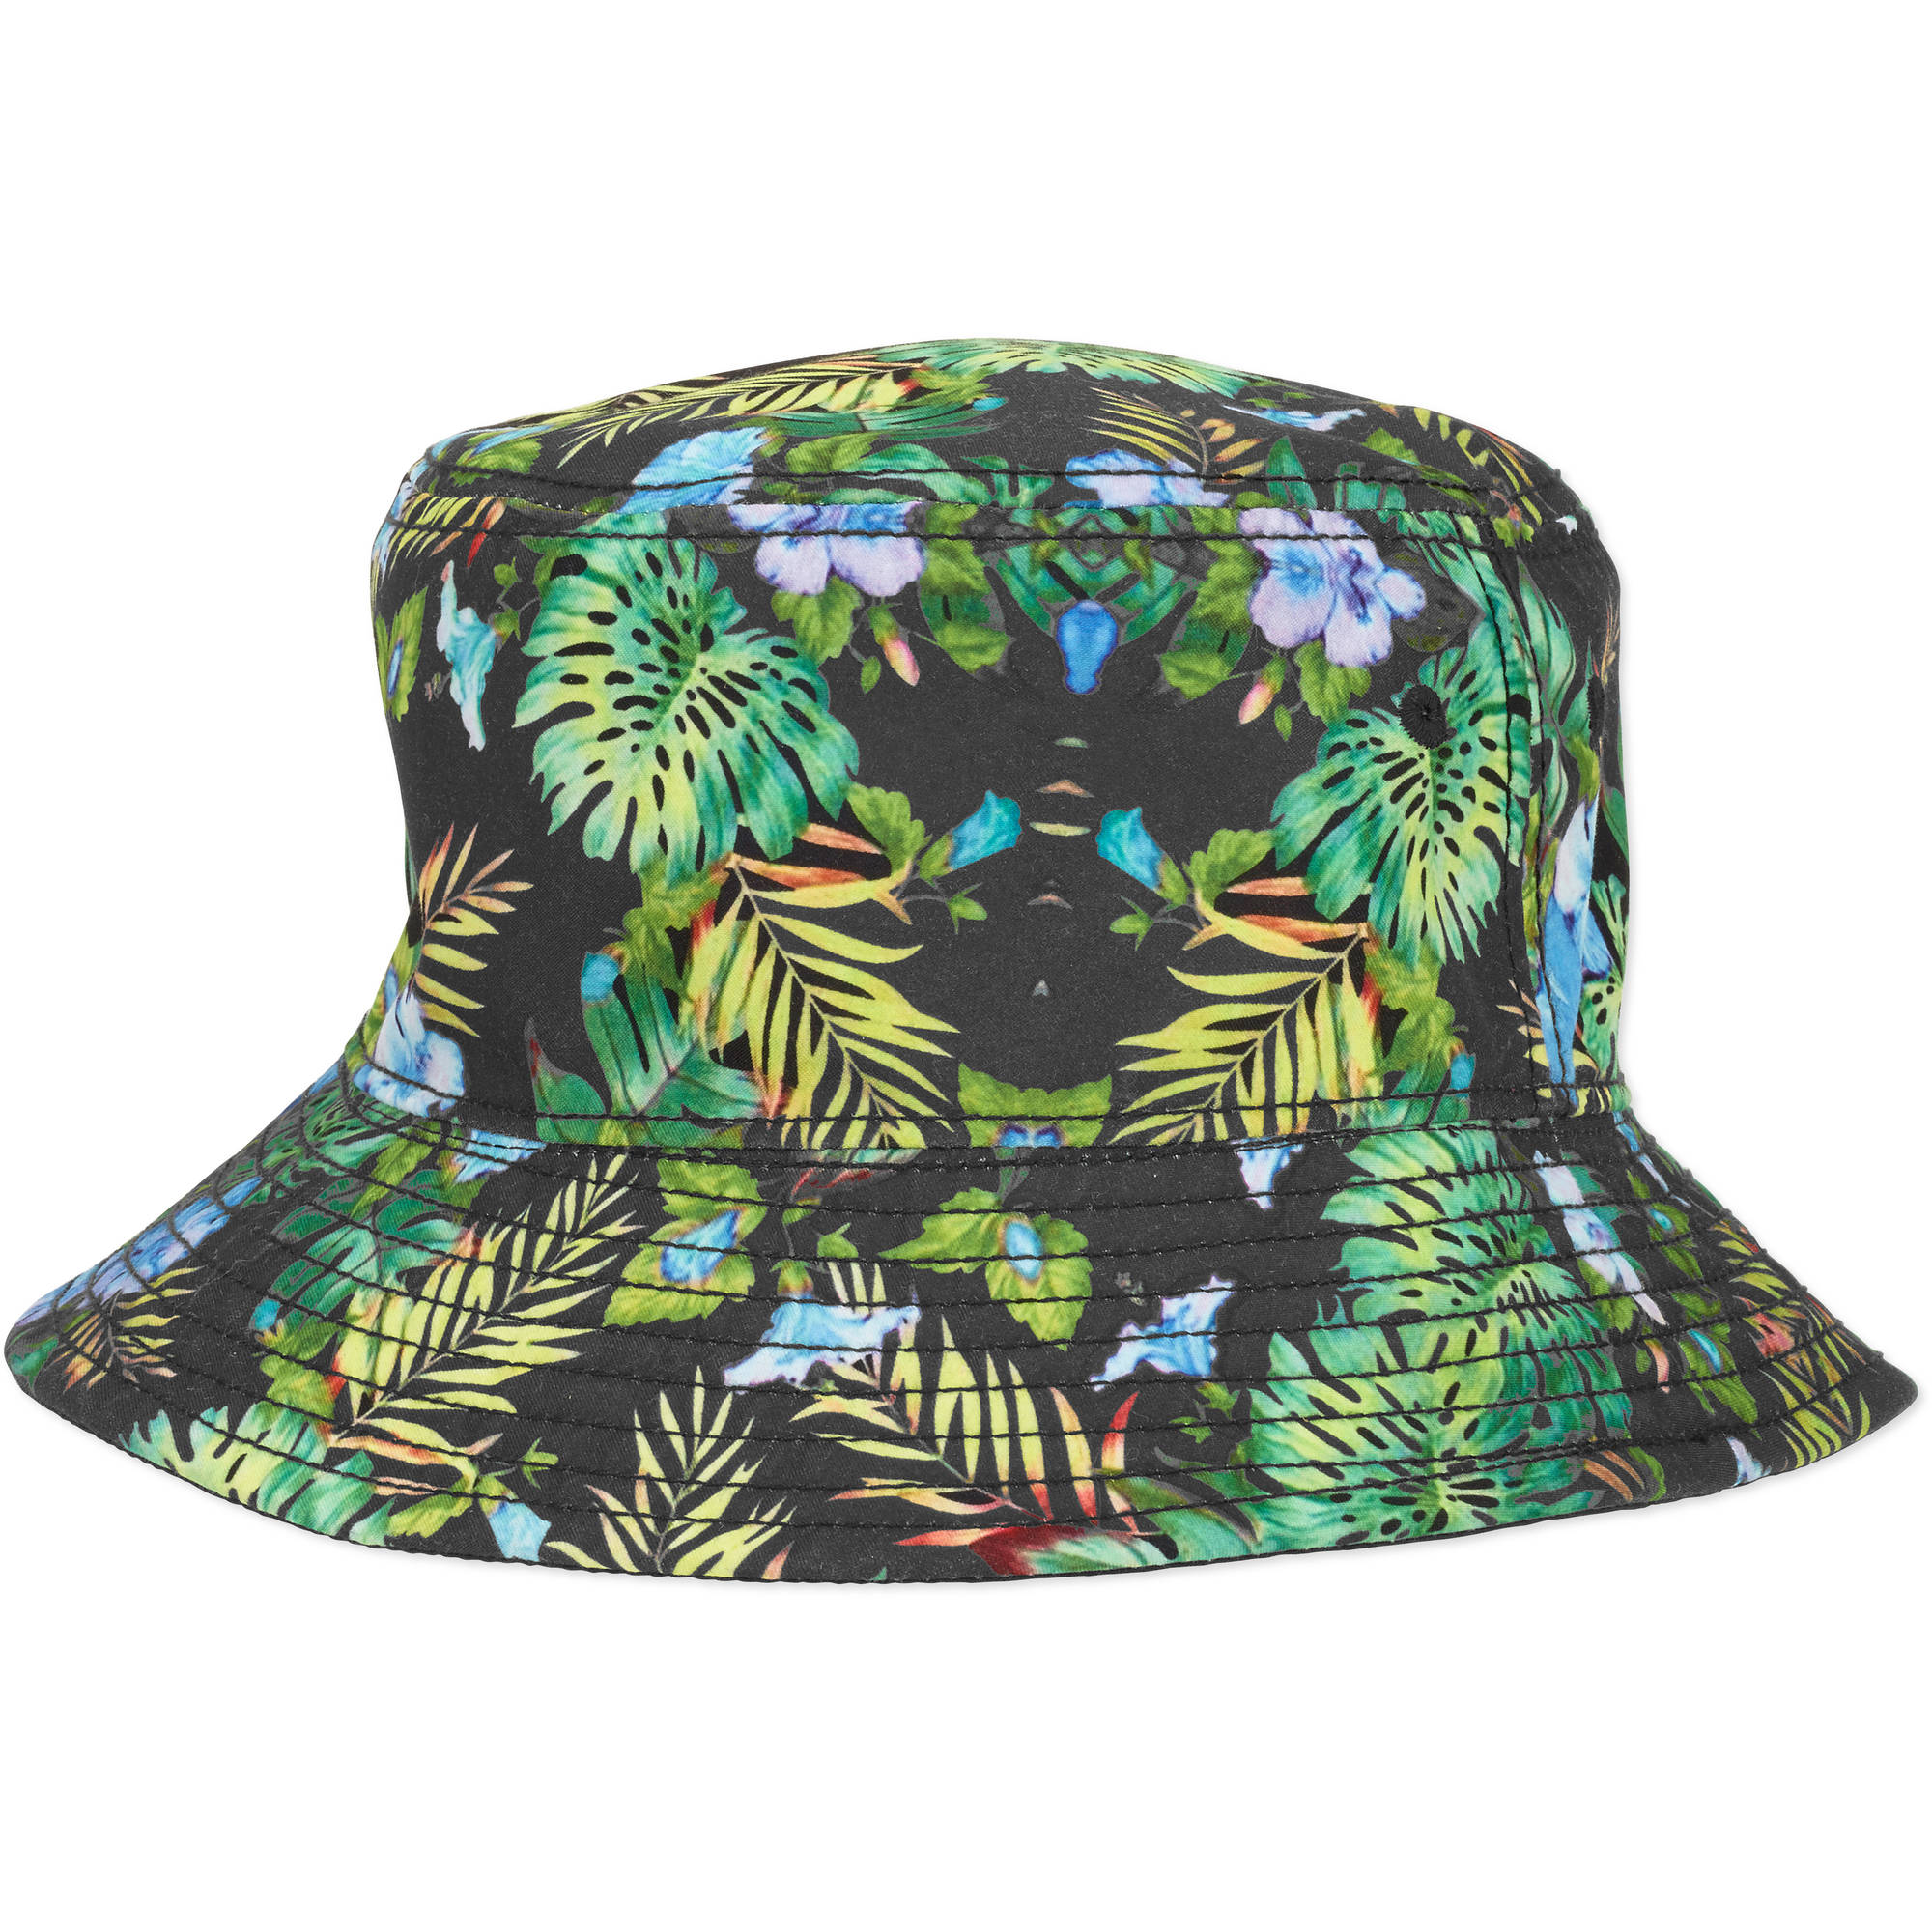 Men's Floral Bucket Hat - image 1 of 1